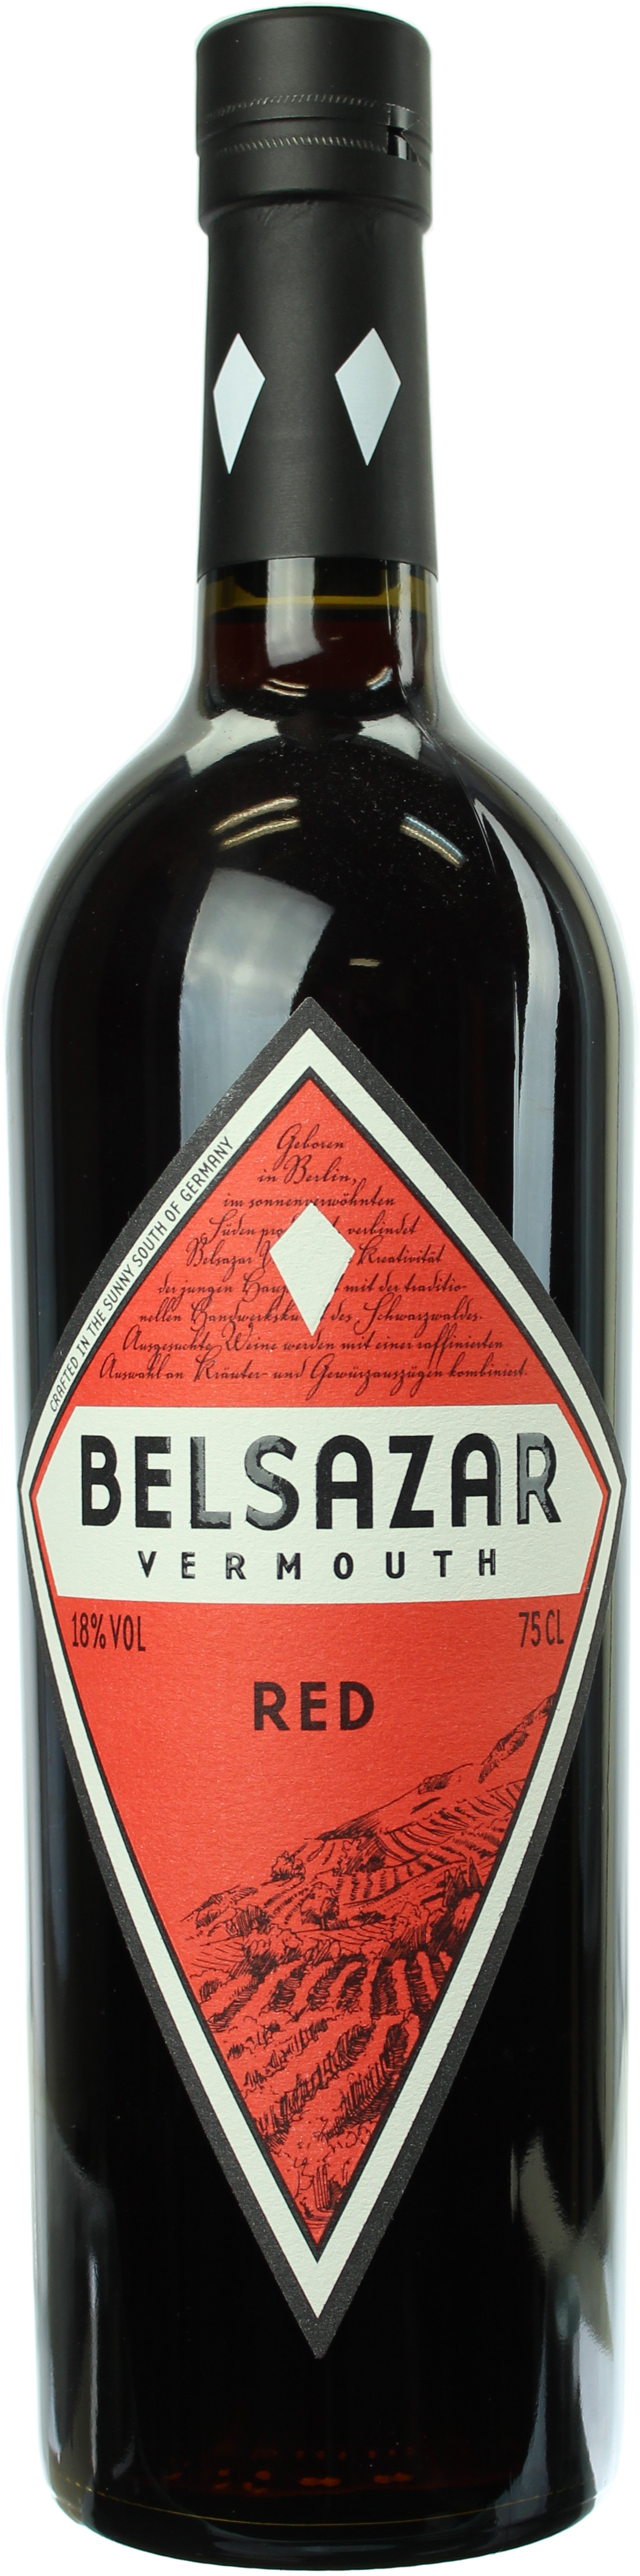 Belsazar Vermouth Red 18.0% 0,75l